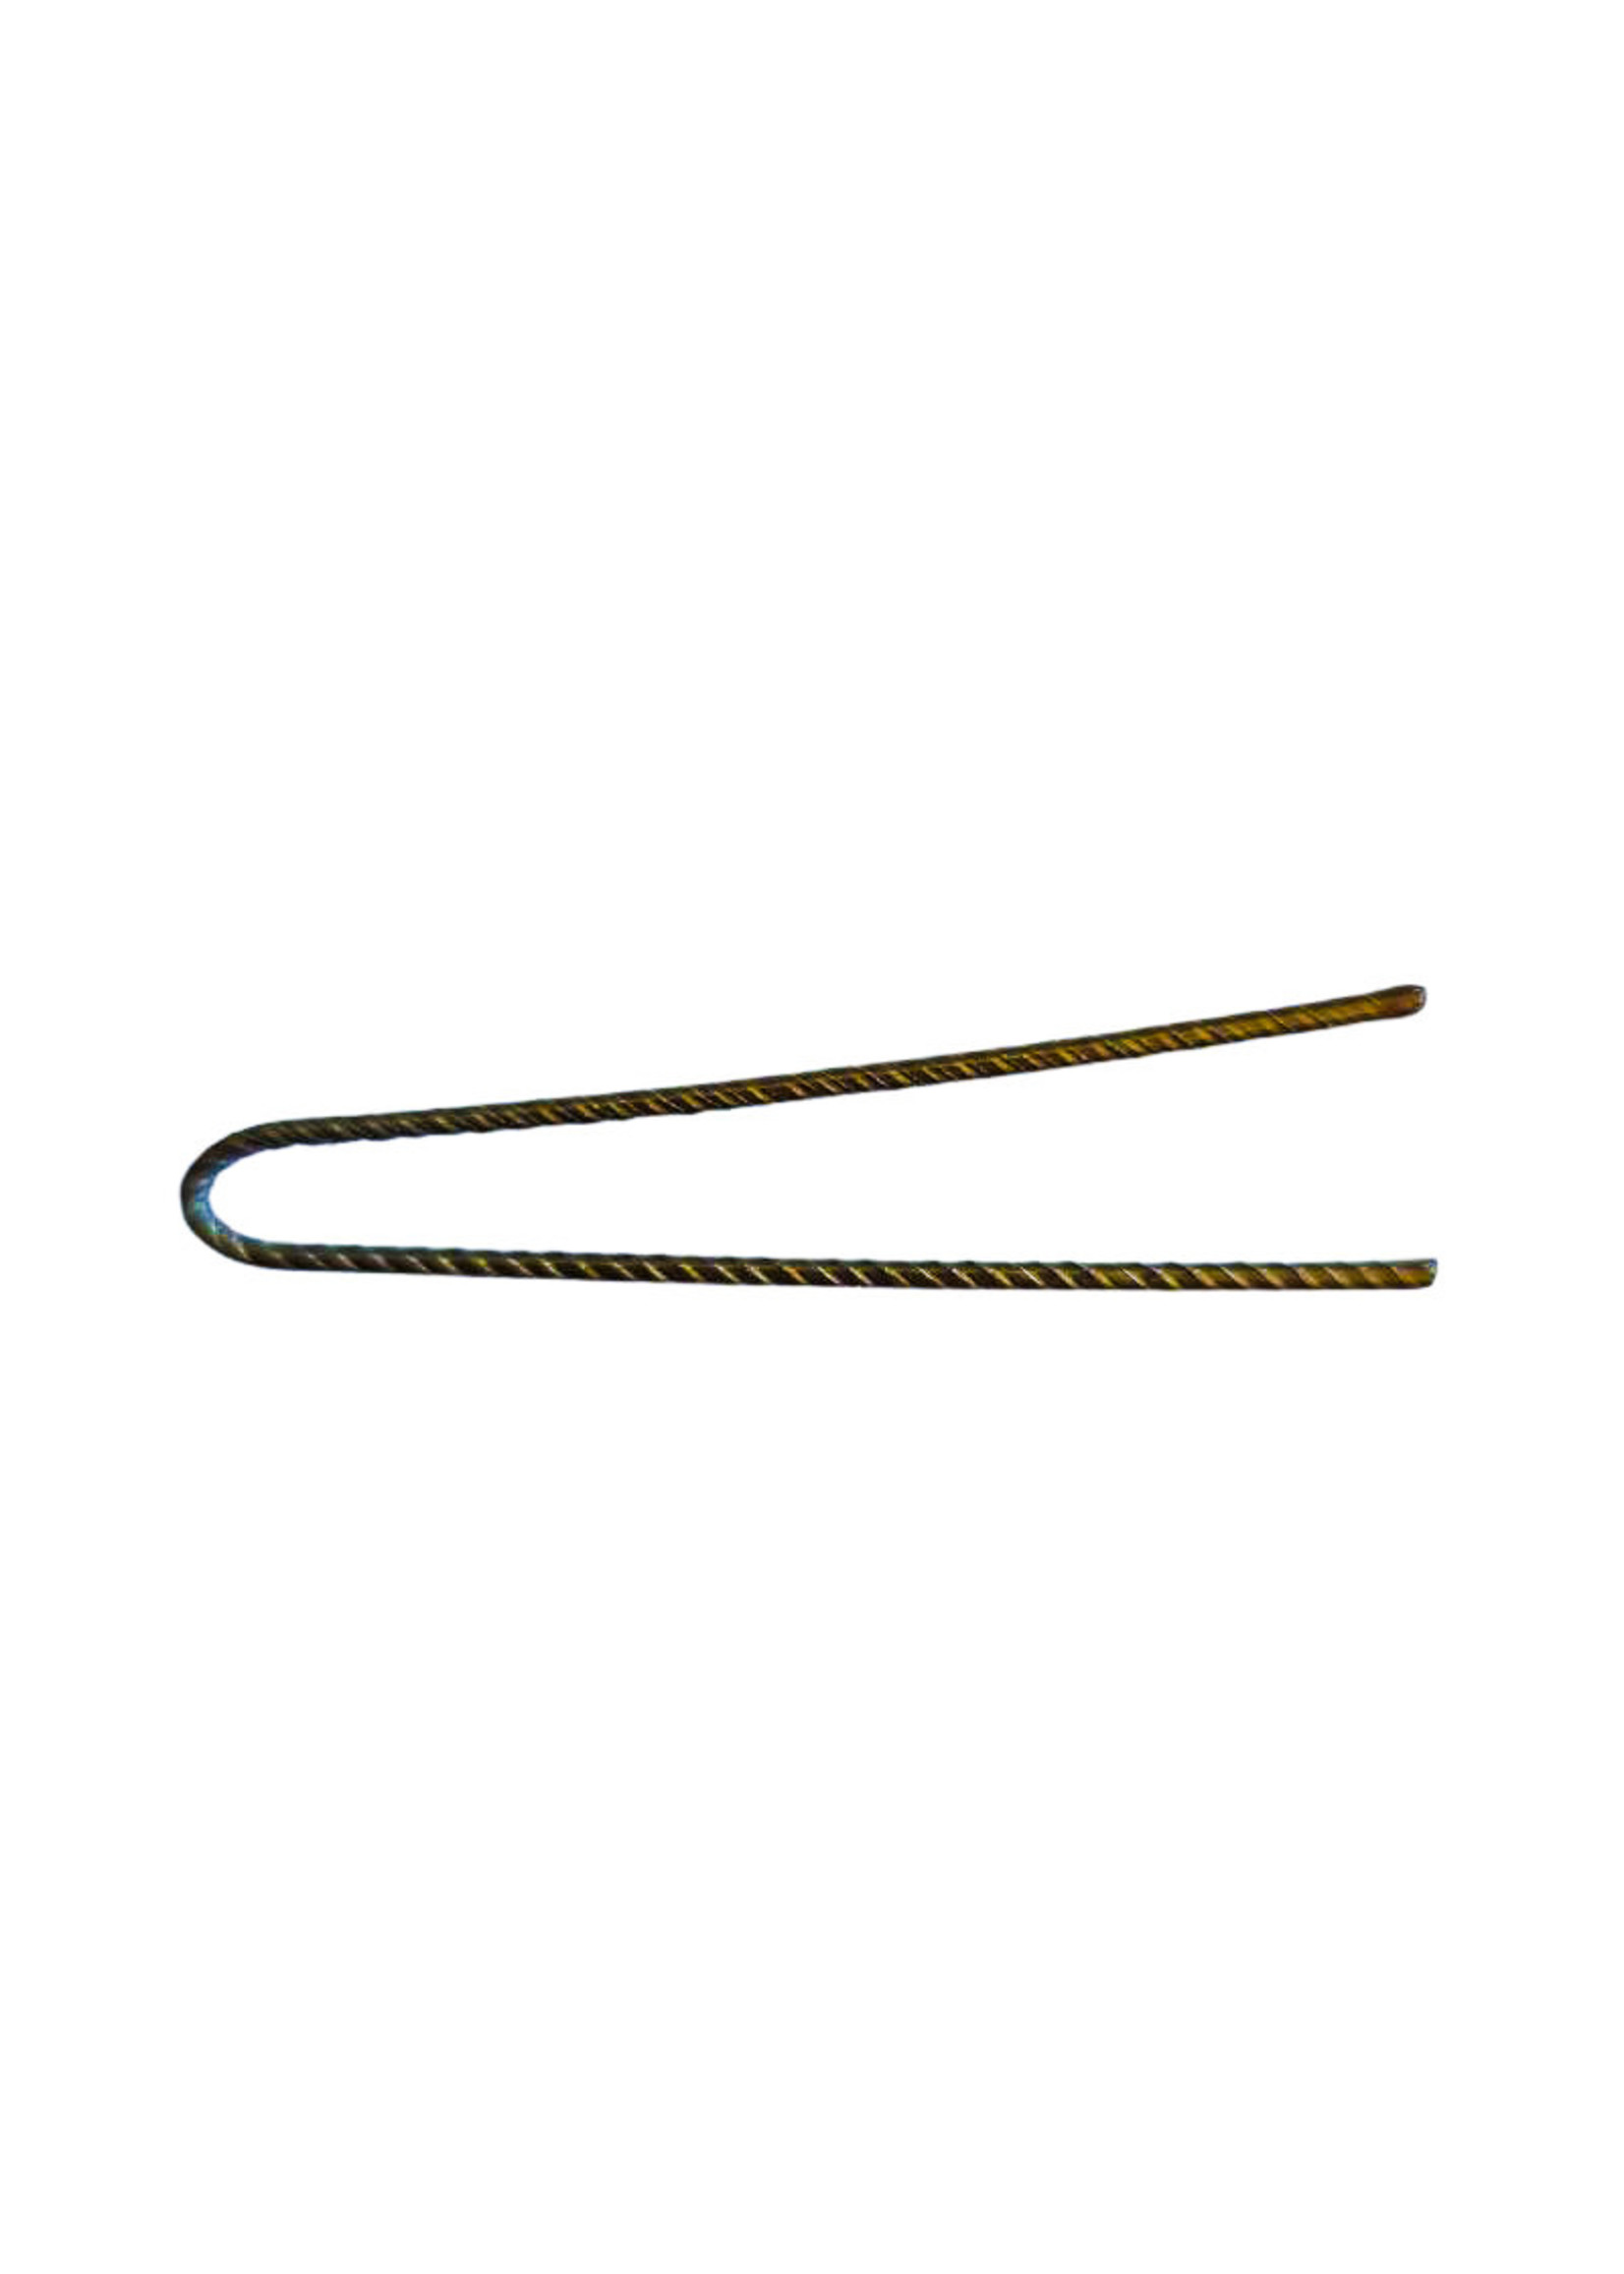 Bull Pins Ripple Pins 2 Inch (50mm) Bronze 10pk